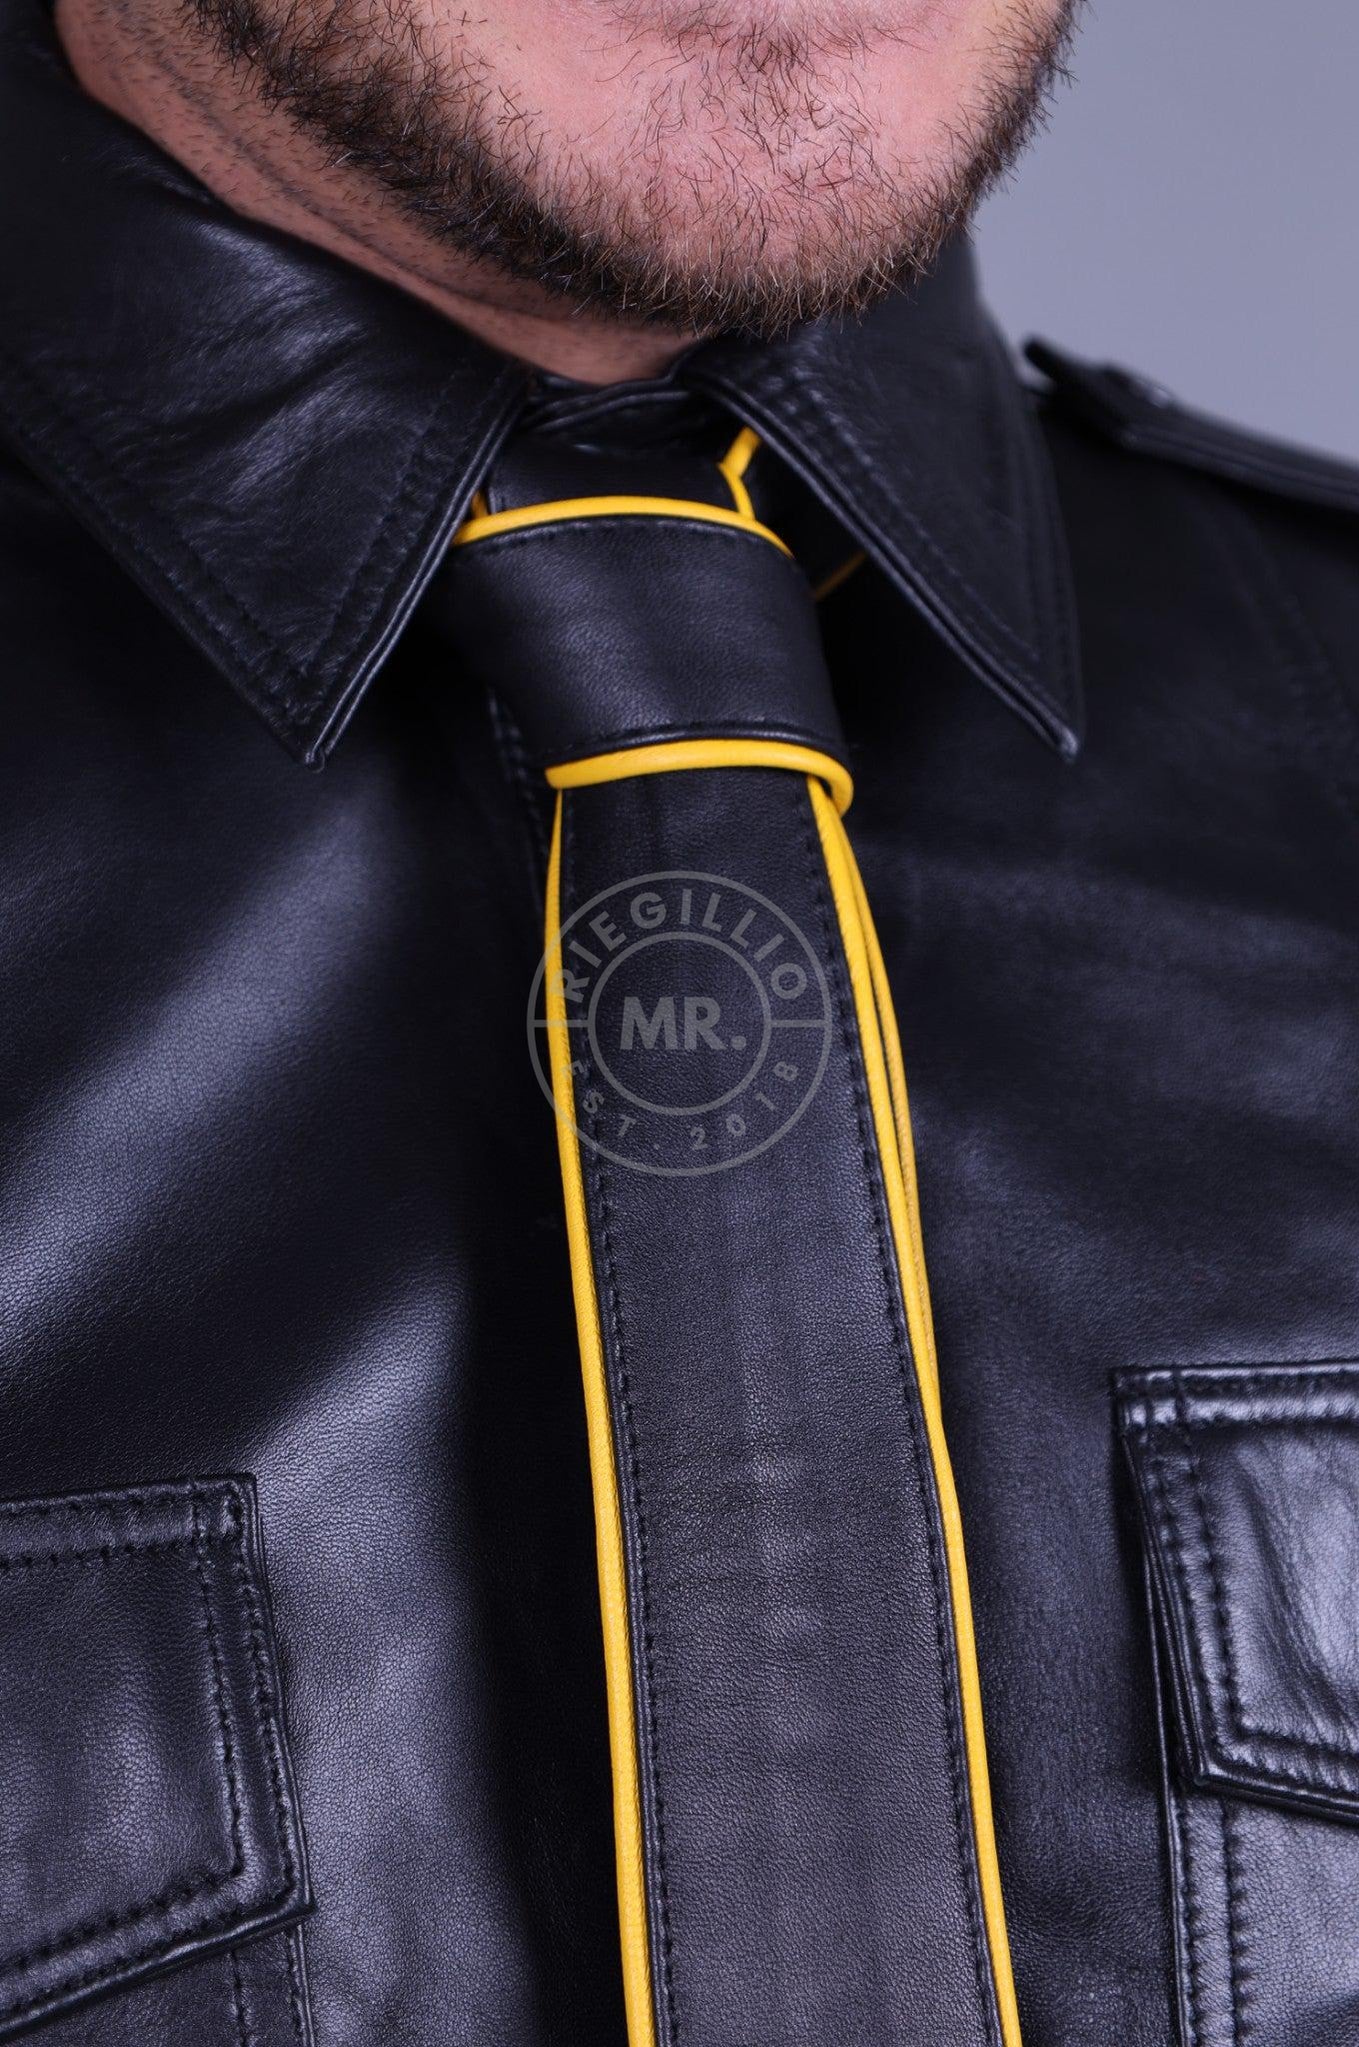 Black Leather Tie - YELLOW Piping-at MR. Riegillio